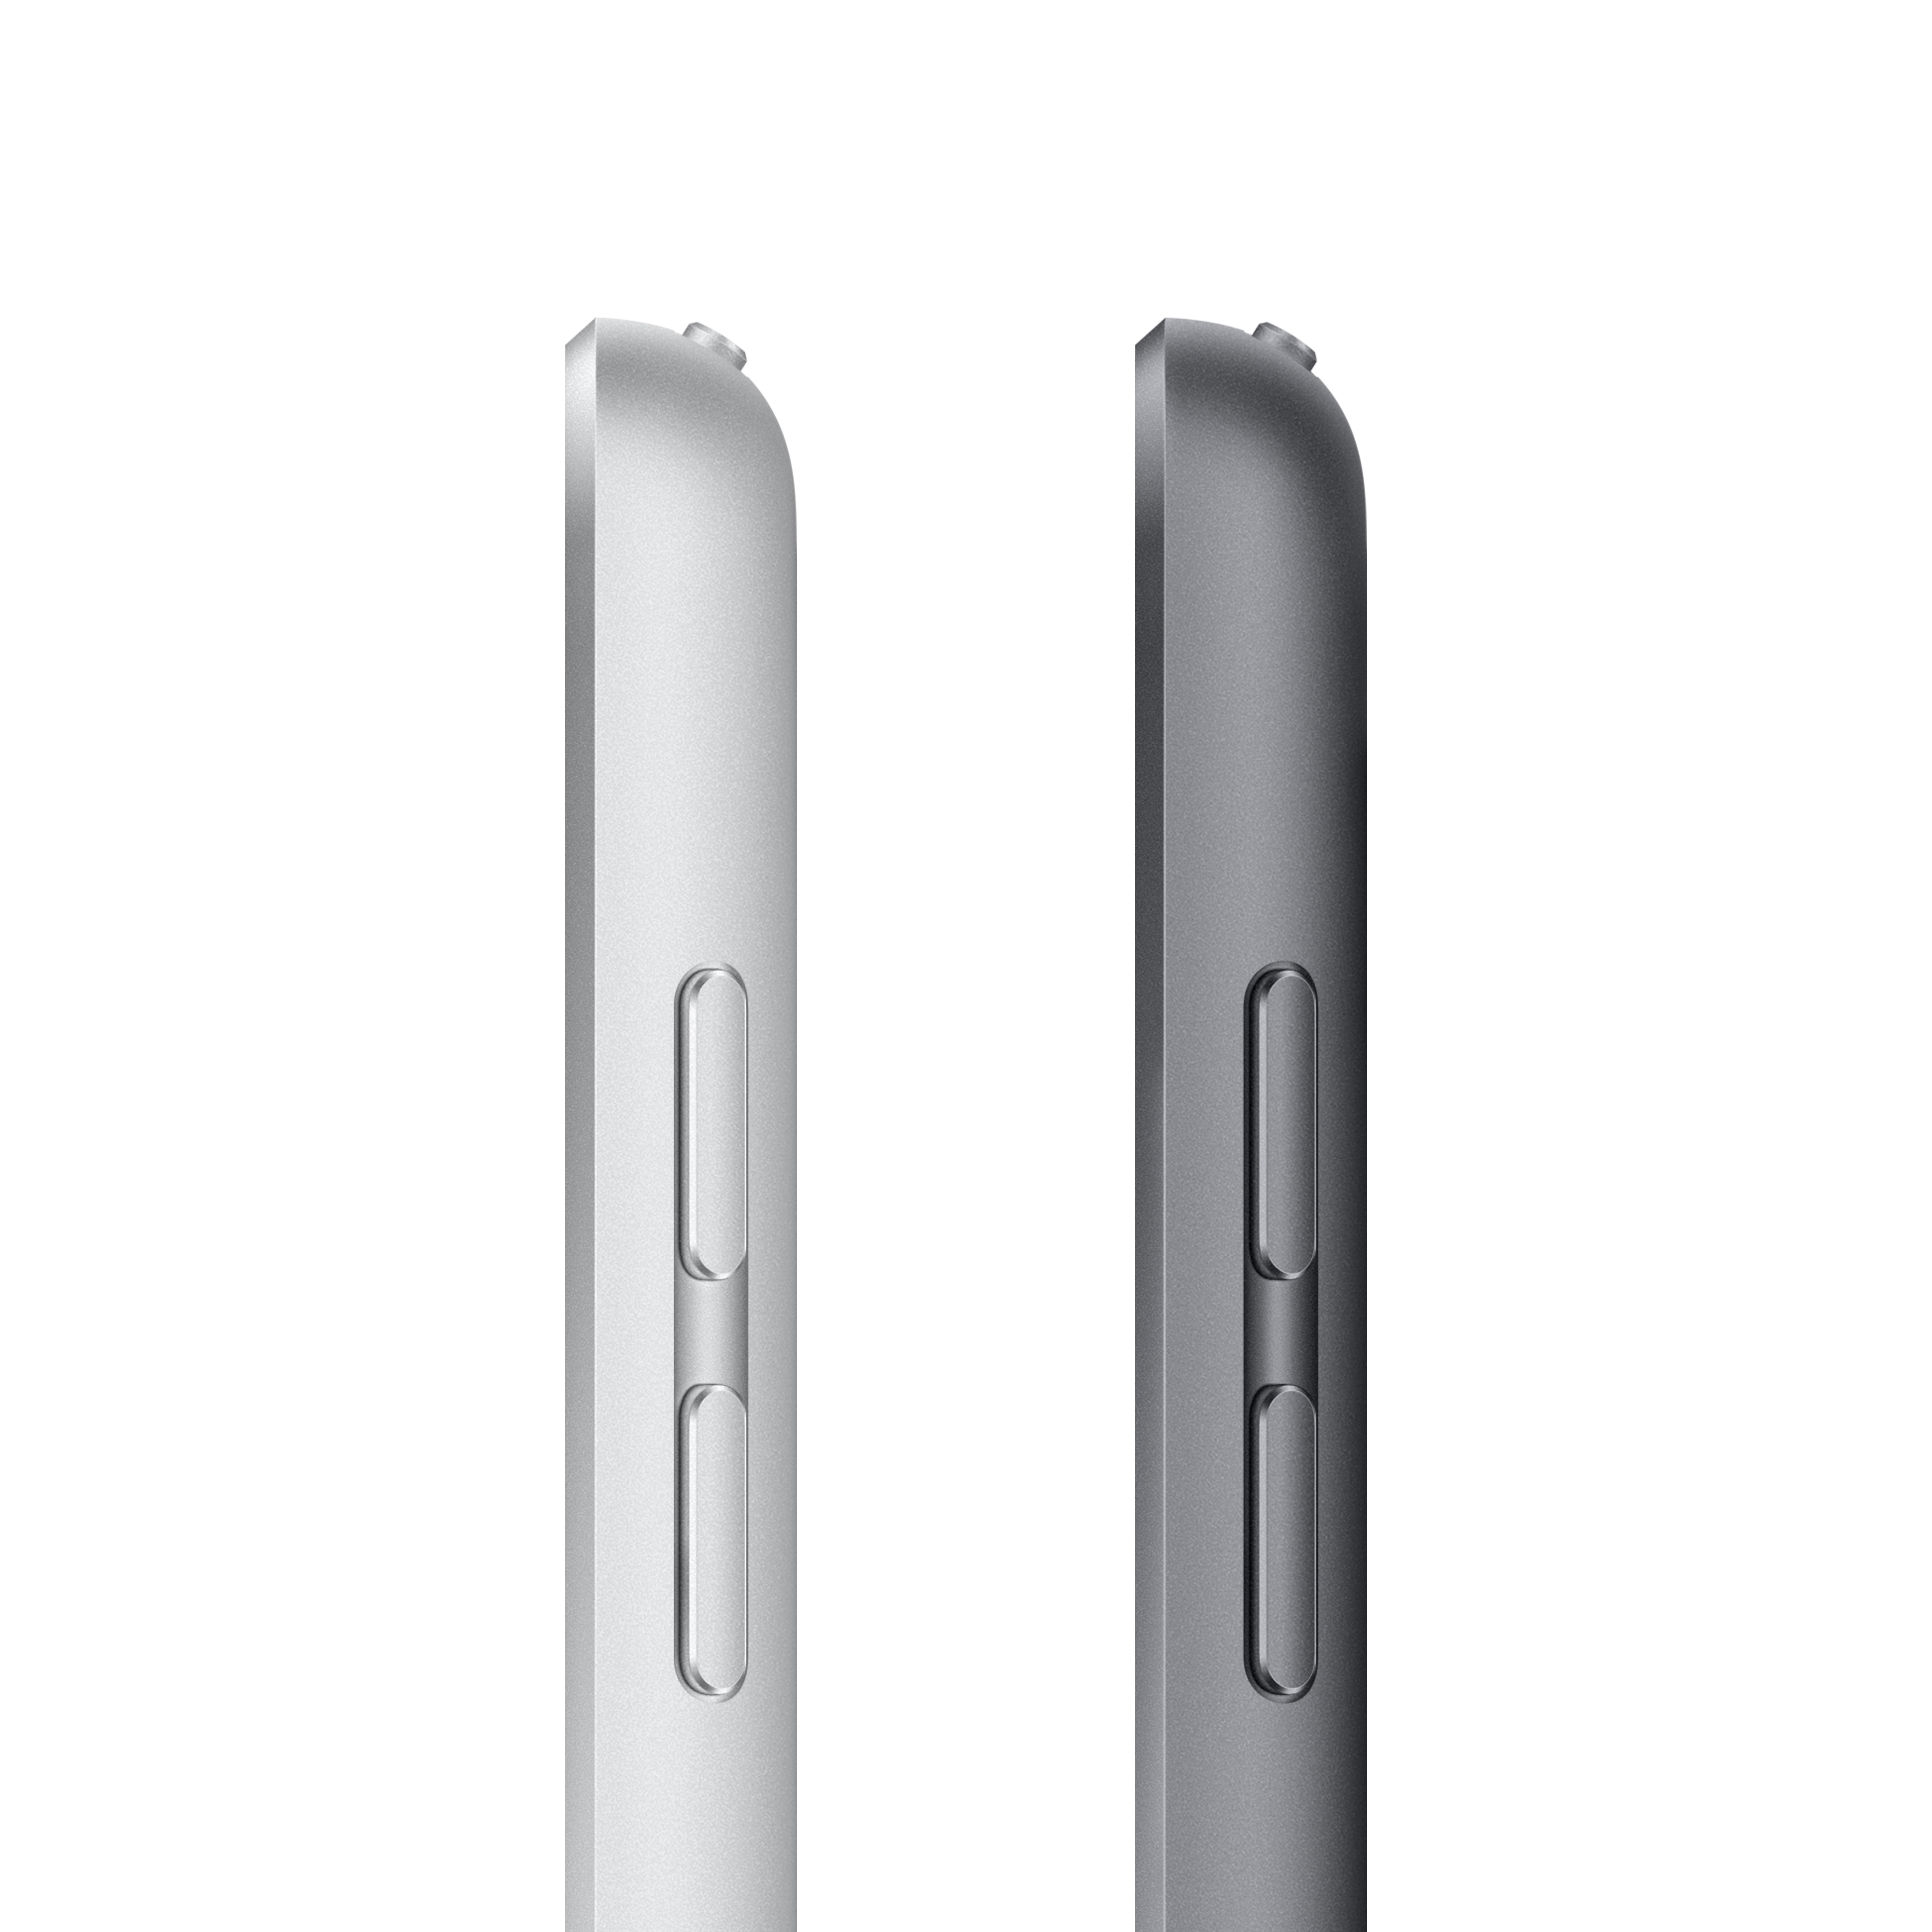 2021 Apple 10.2-inch iPad Wi-Fi 64GB - Silver (9th Generation) - image 7 of 10